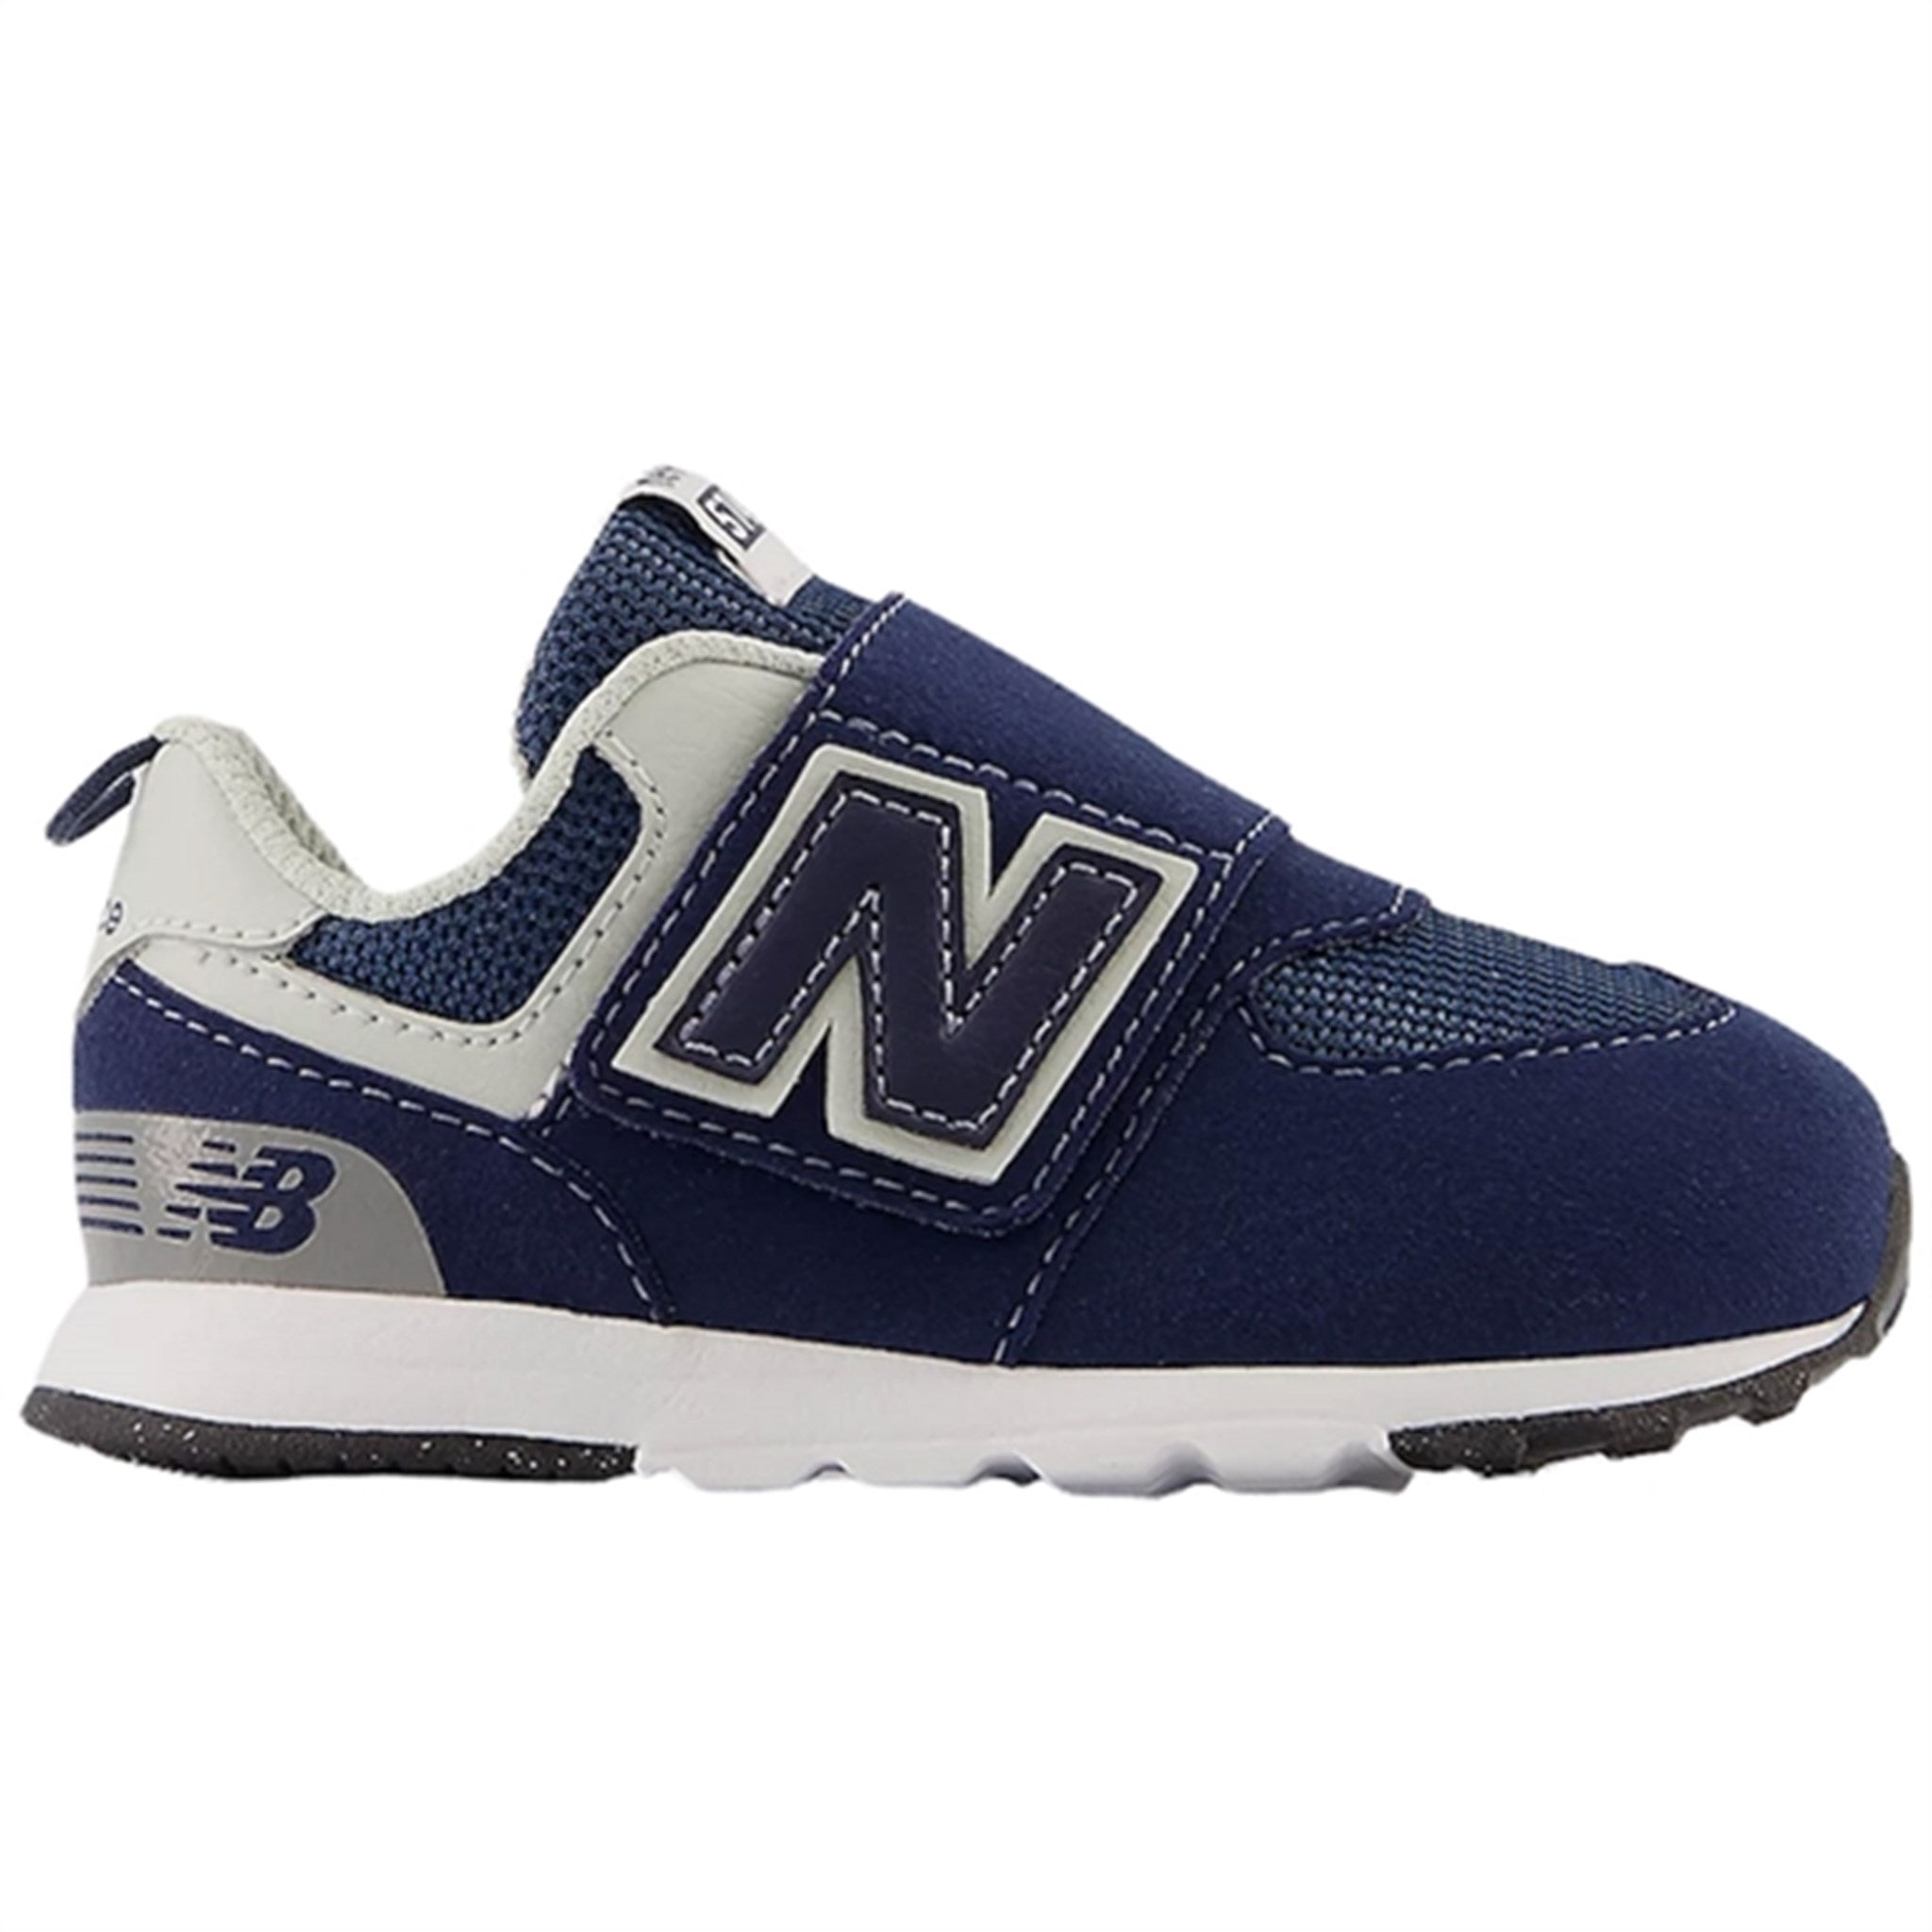 New Balance 574 NB Navy Sneakers